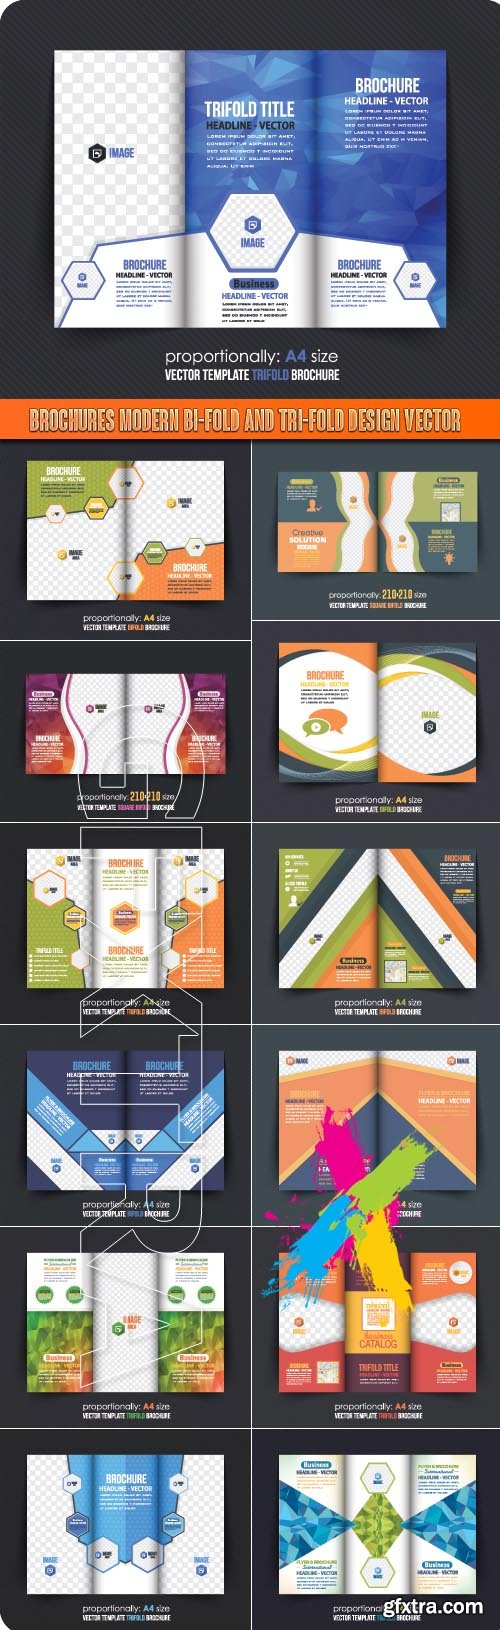 Brochures modern bi-fold and tri-fold design vector